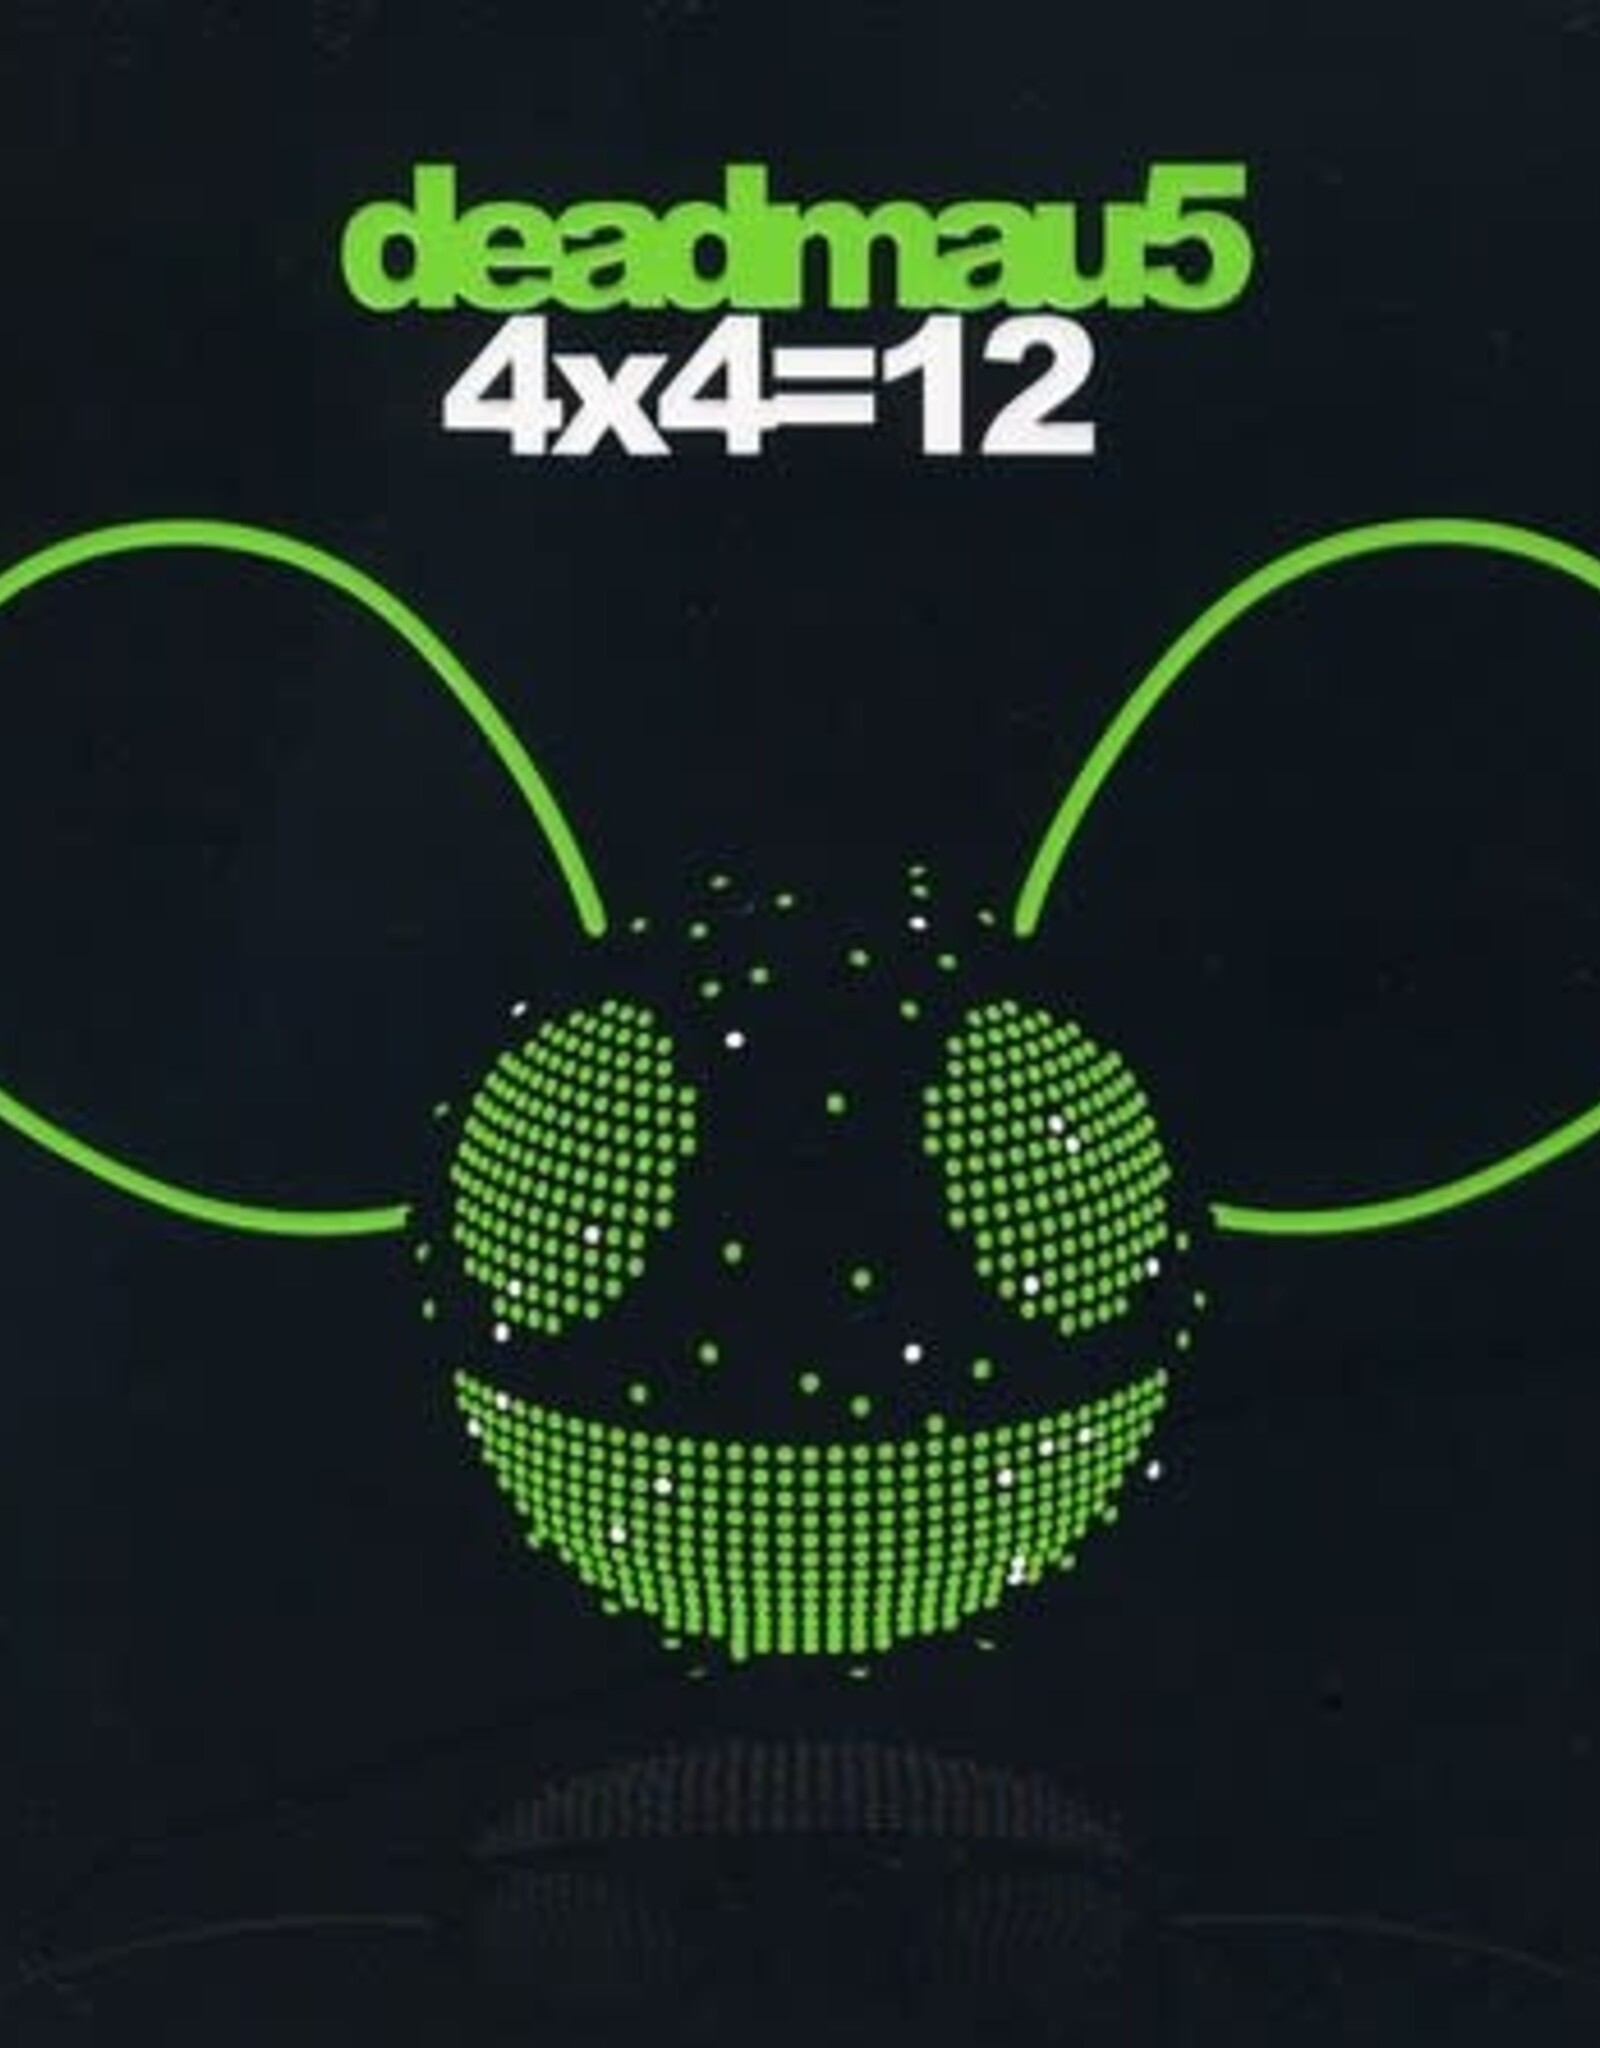 Deadmau5 - 4x4=12 (Green Vinyl)